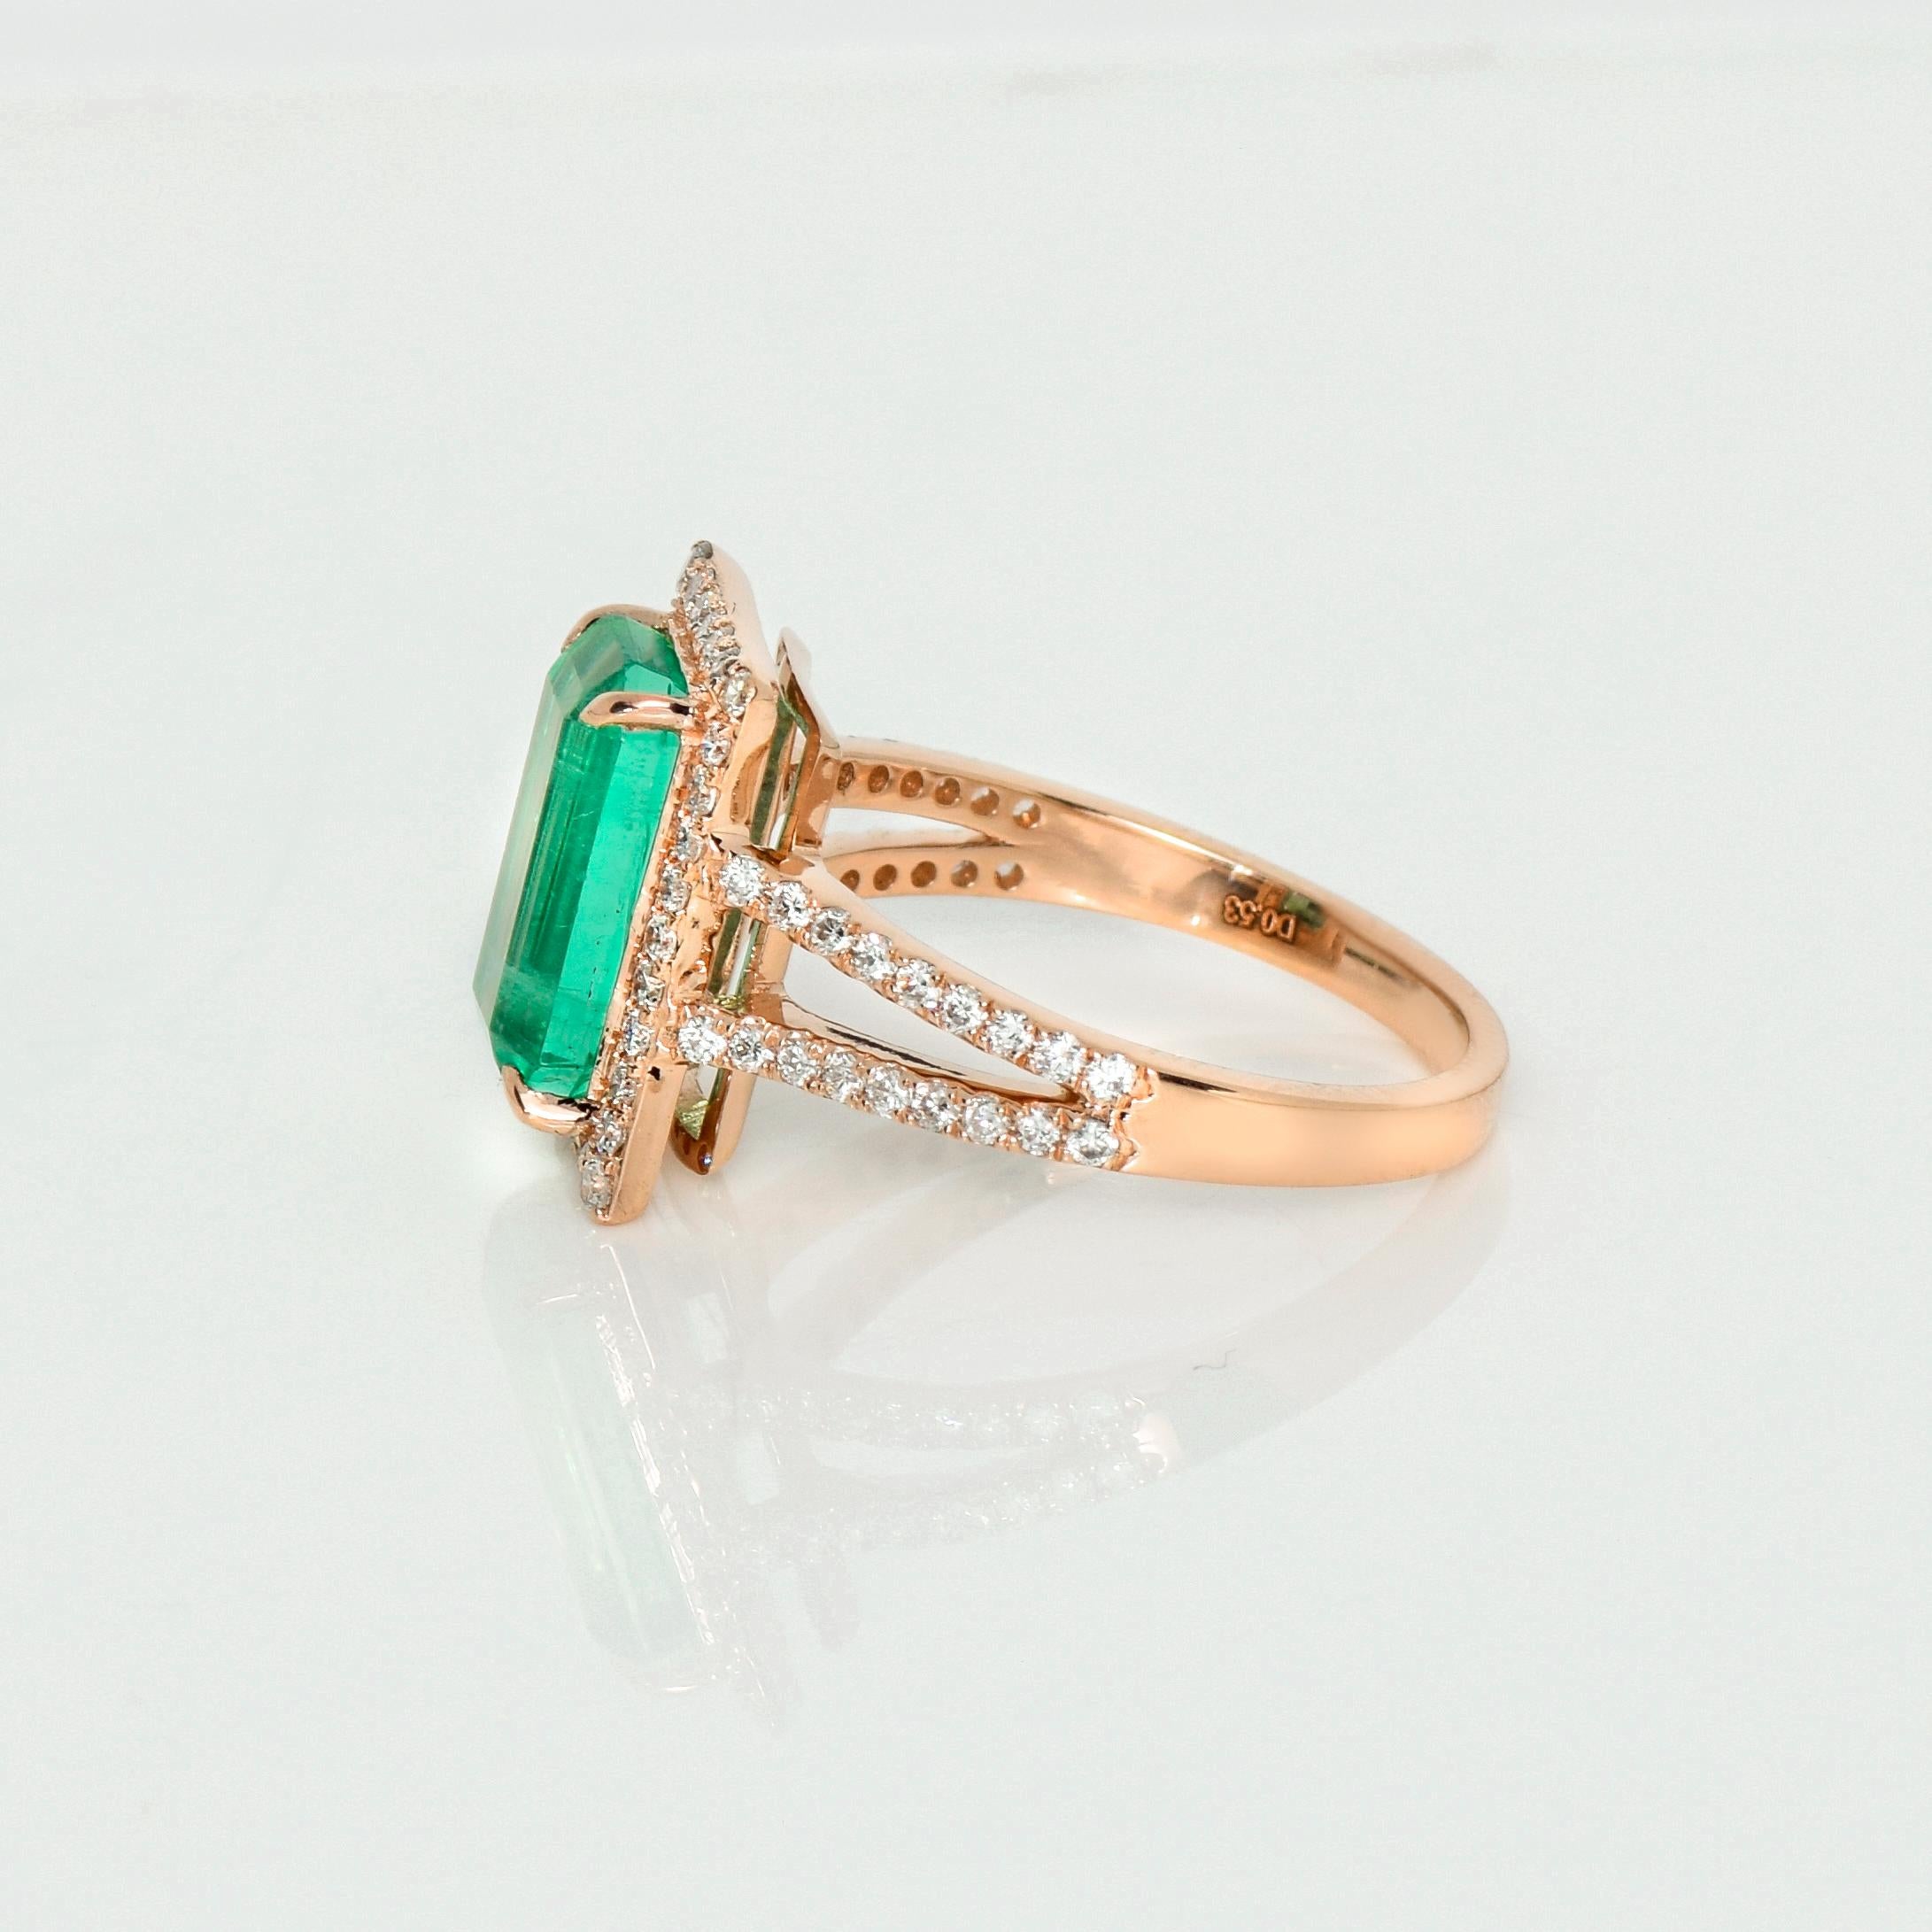 Emerald Cut IGI 14k 3.03 Carat Natural Emerald & Diamond Antique Art Deco Engagement Ring For Sale